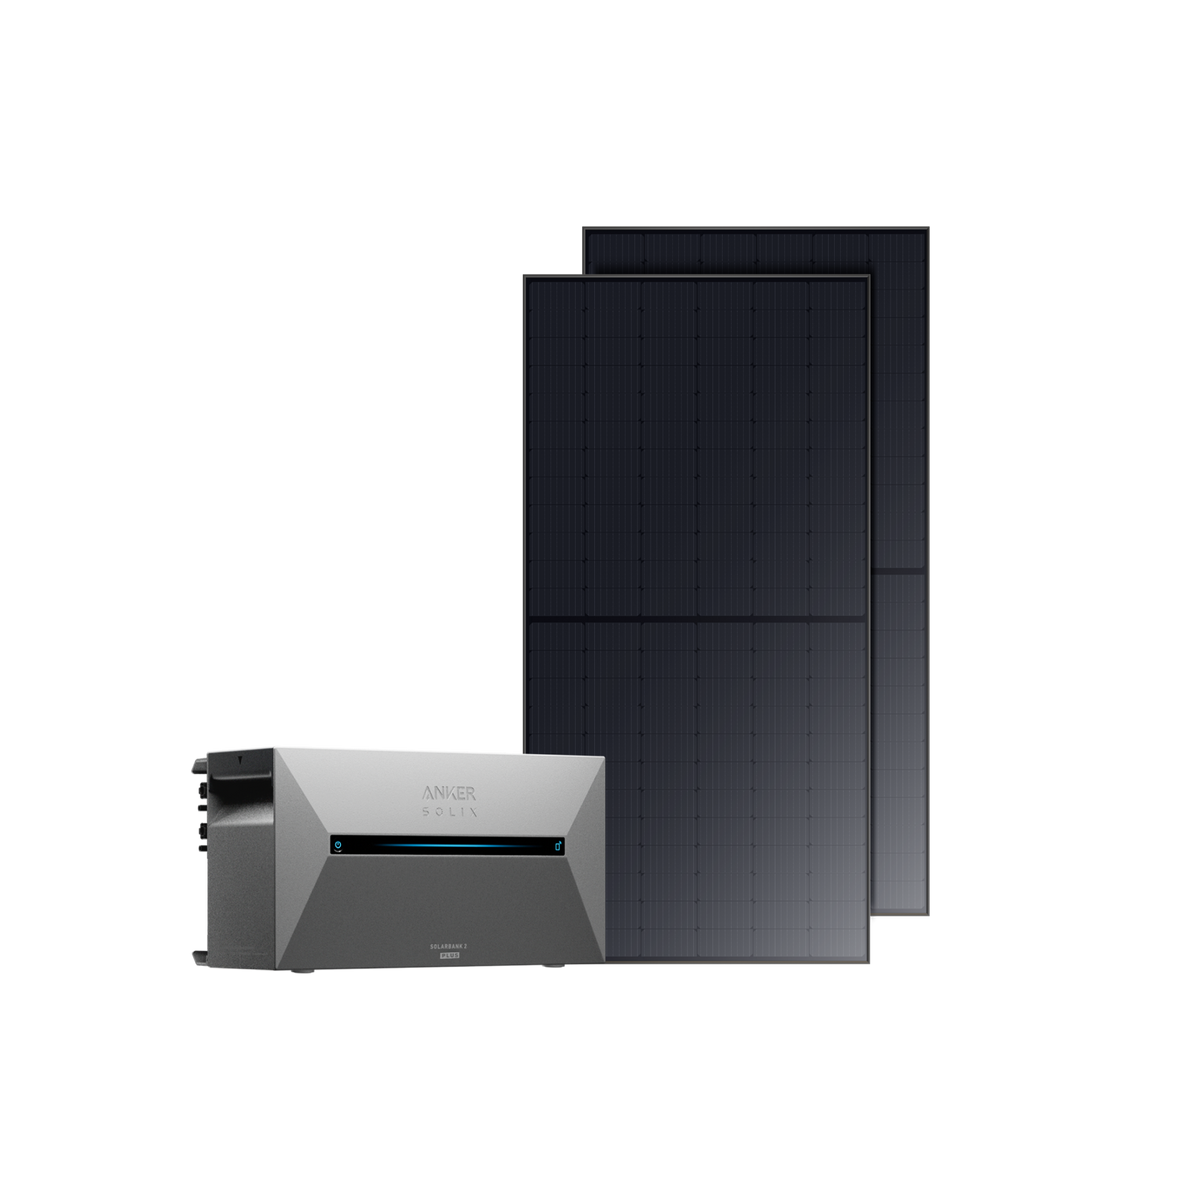 Anker SOLIX Solarbank 2 E1600 Plus Solarstromspeicher